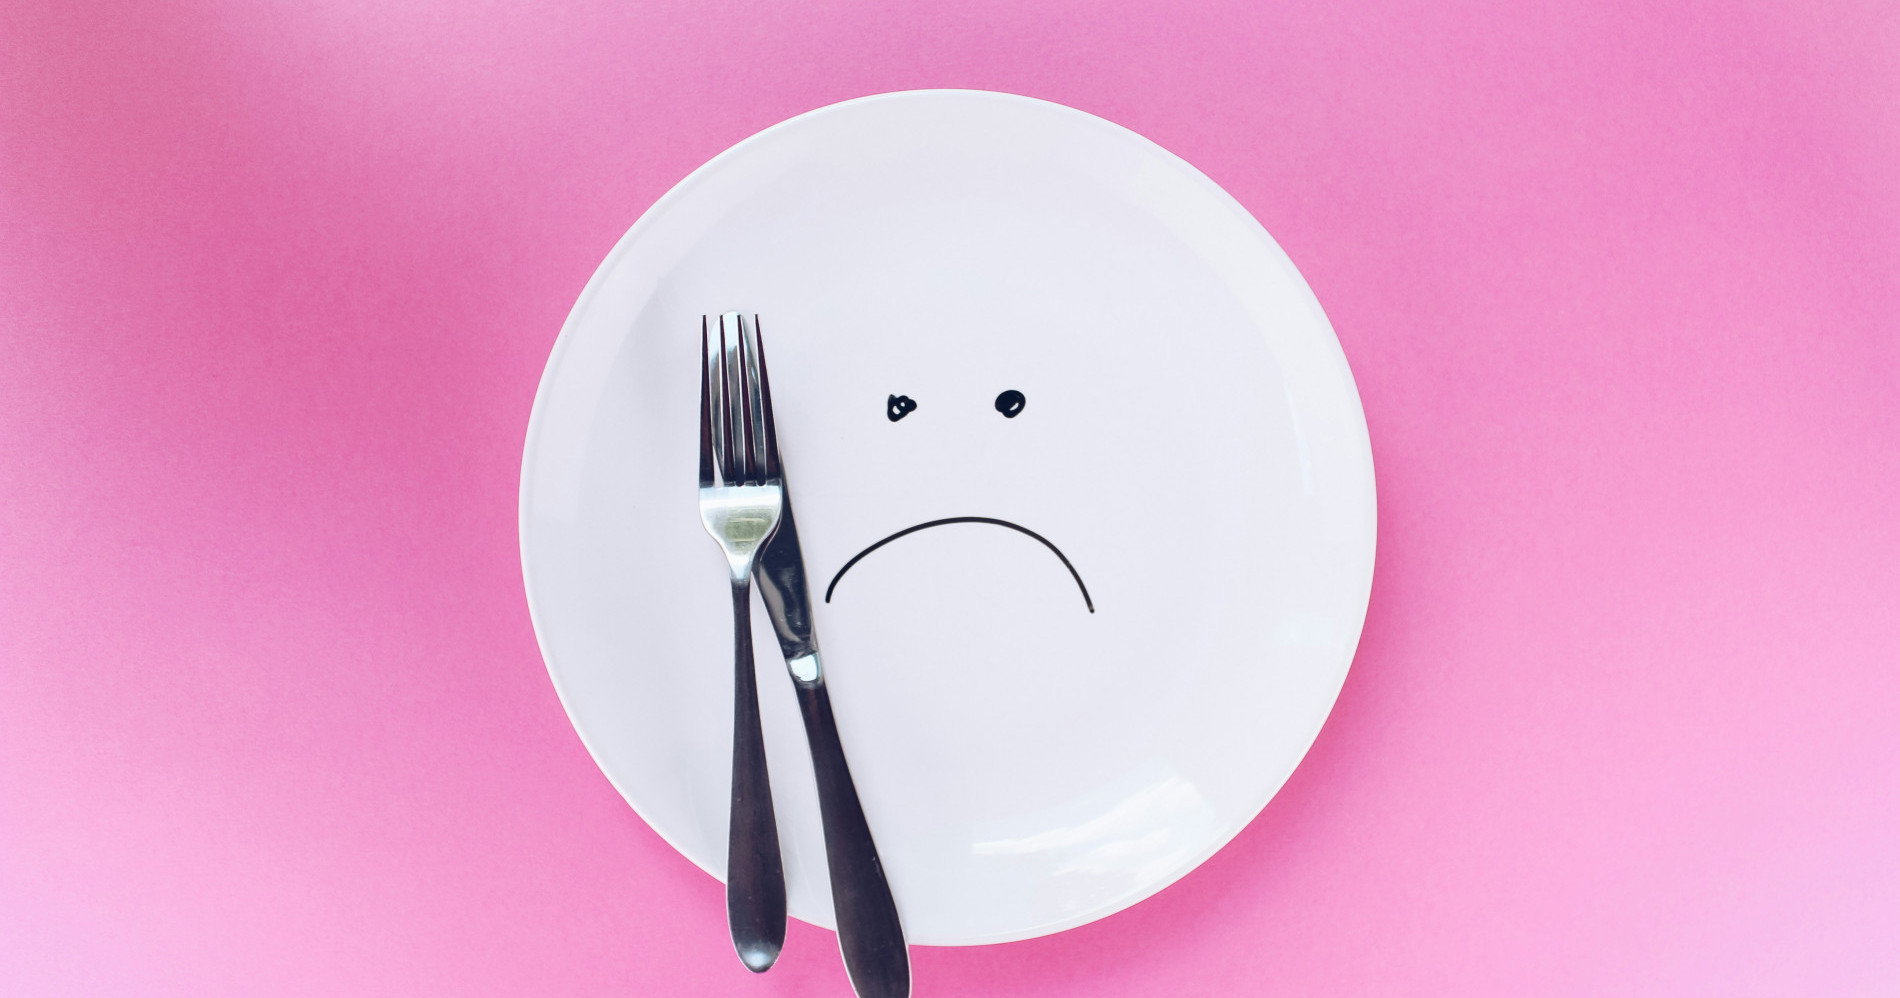 Menjaga pola makan merupakan salah satu cara menjaga berat badan pasca idul fitri (Sumber: unsplash.com by Thought Catalog)